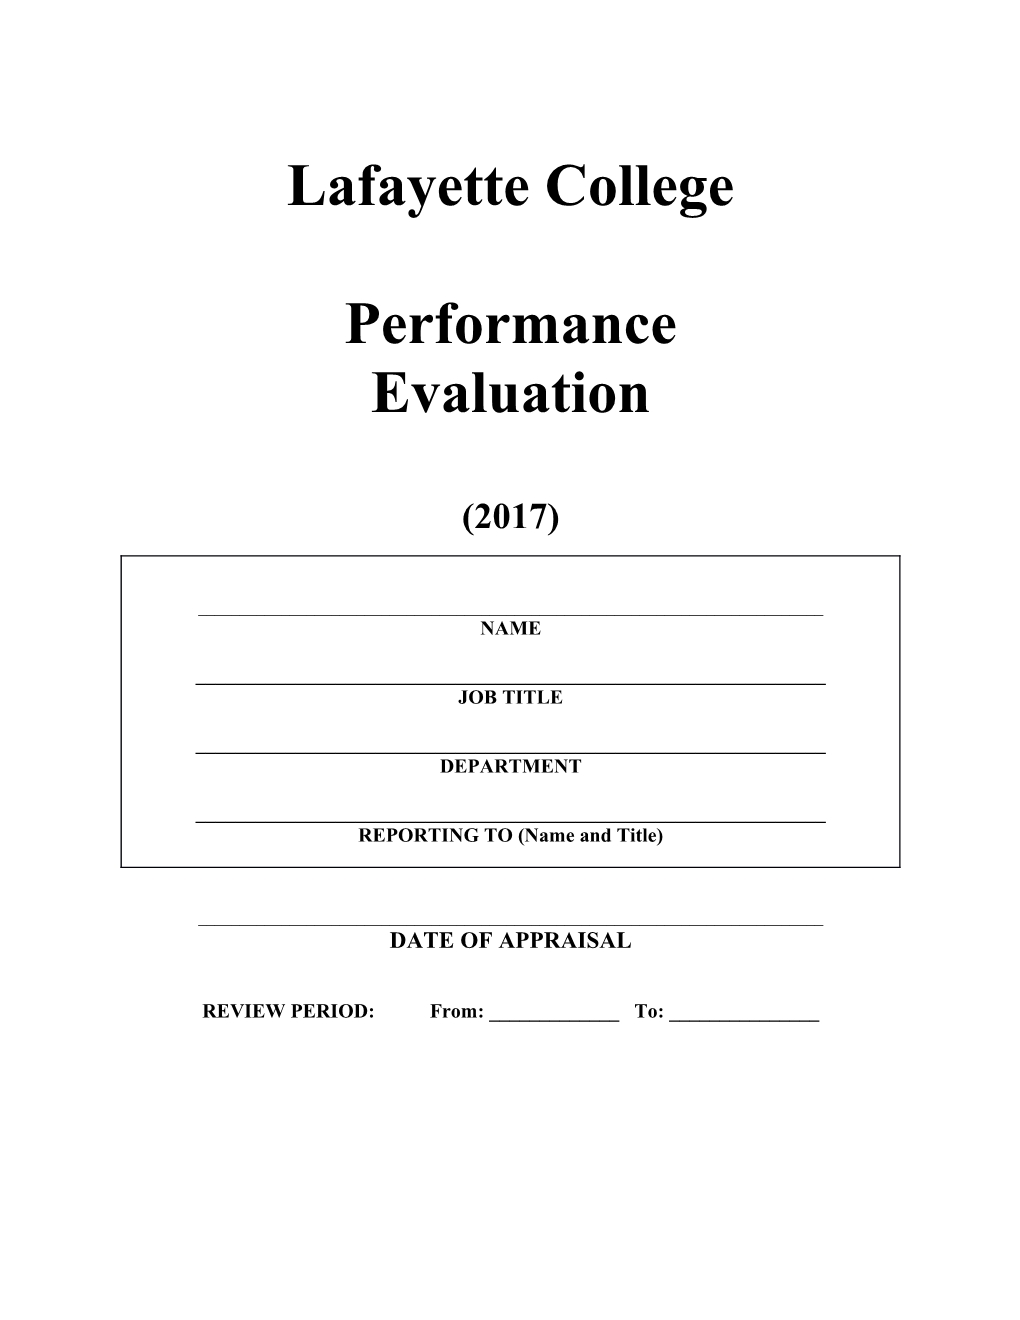 LAFAYETTE COLLEGE Performance Evaluation